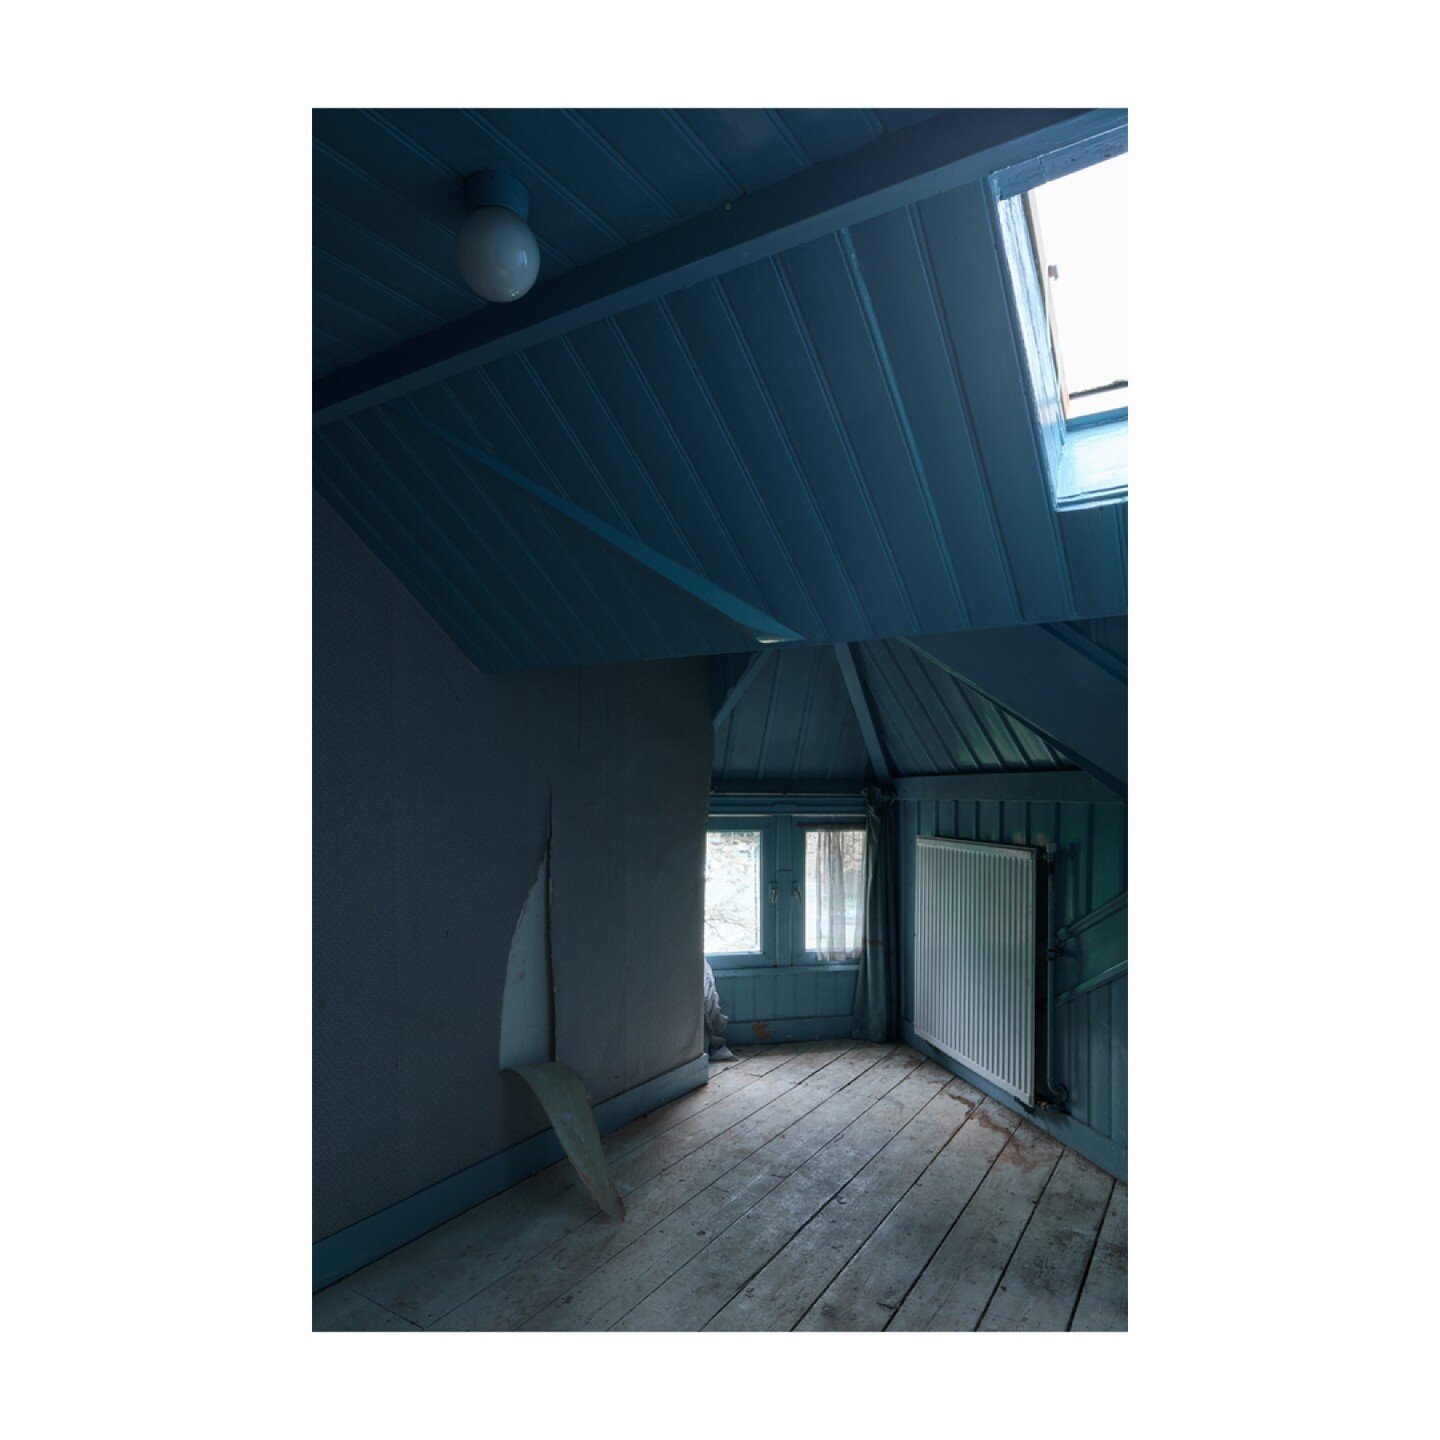 May 2023, Utrecht, shot for @sergeschoemaker.architects
.
.
.
.
#old #blueroom #allblue #adblue ##flooring #tintsandshades #woodflooring #shadesoftints #shadesonhand #building #door #stairs #fixture #buildingporn #buildingphotography #doorsopen #home